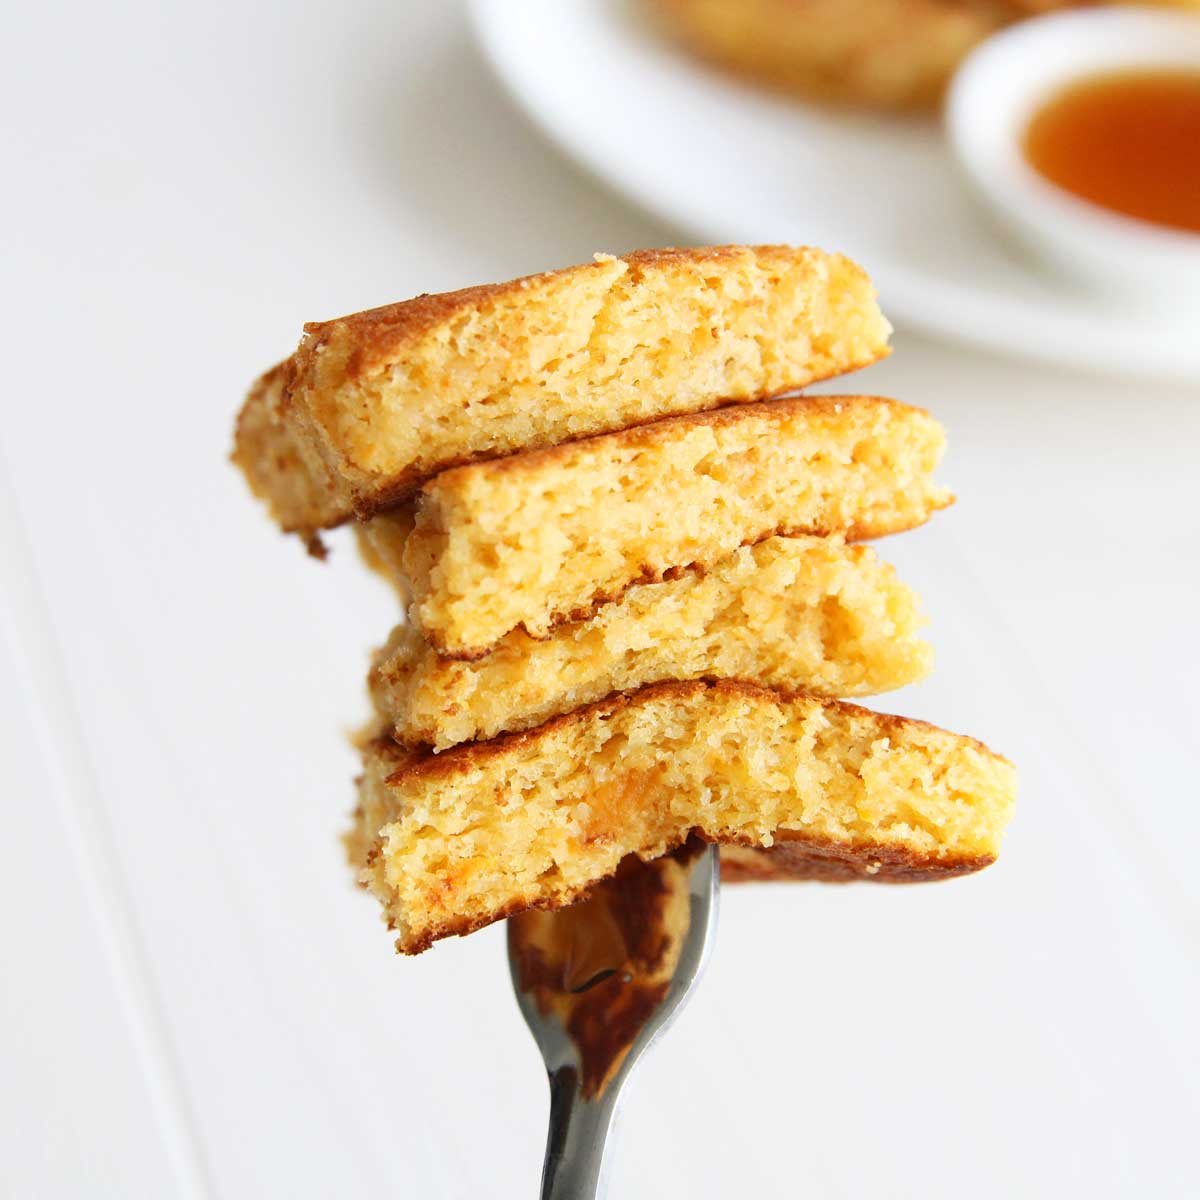 Gluten Free Sweet Potato Pancakes (Healthy Paleo Recipe) - Ricotta Cheese Hot Cross Buns